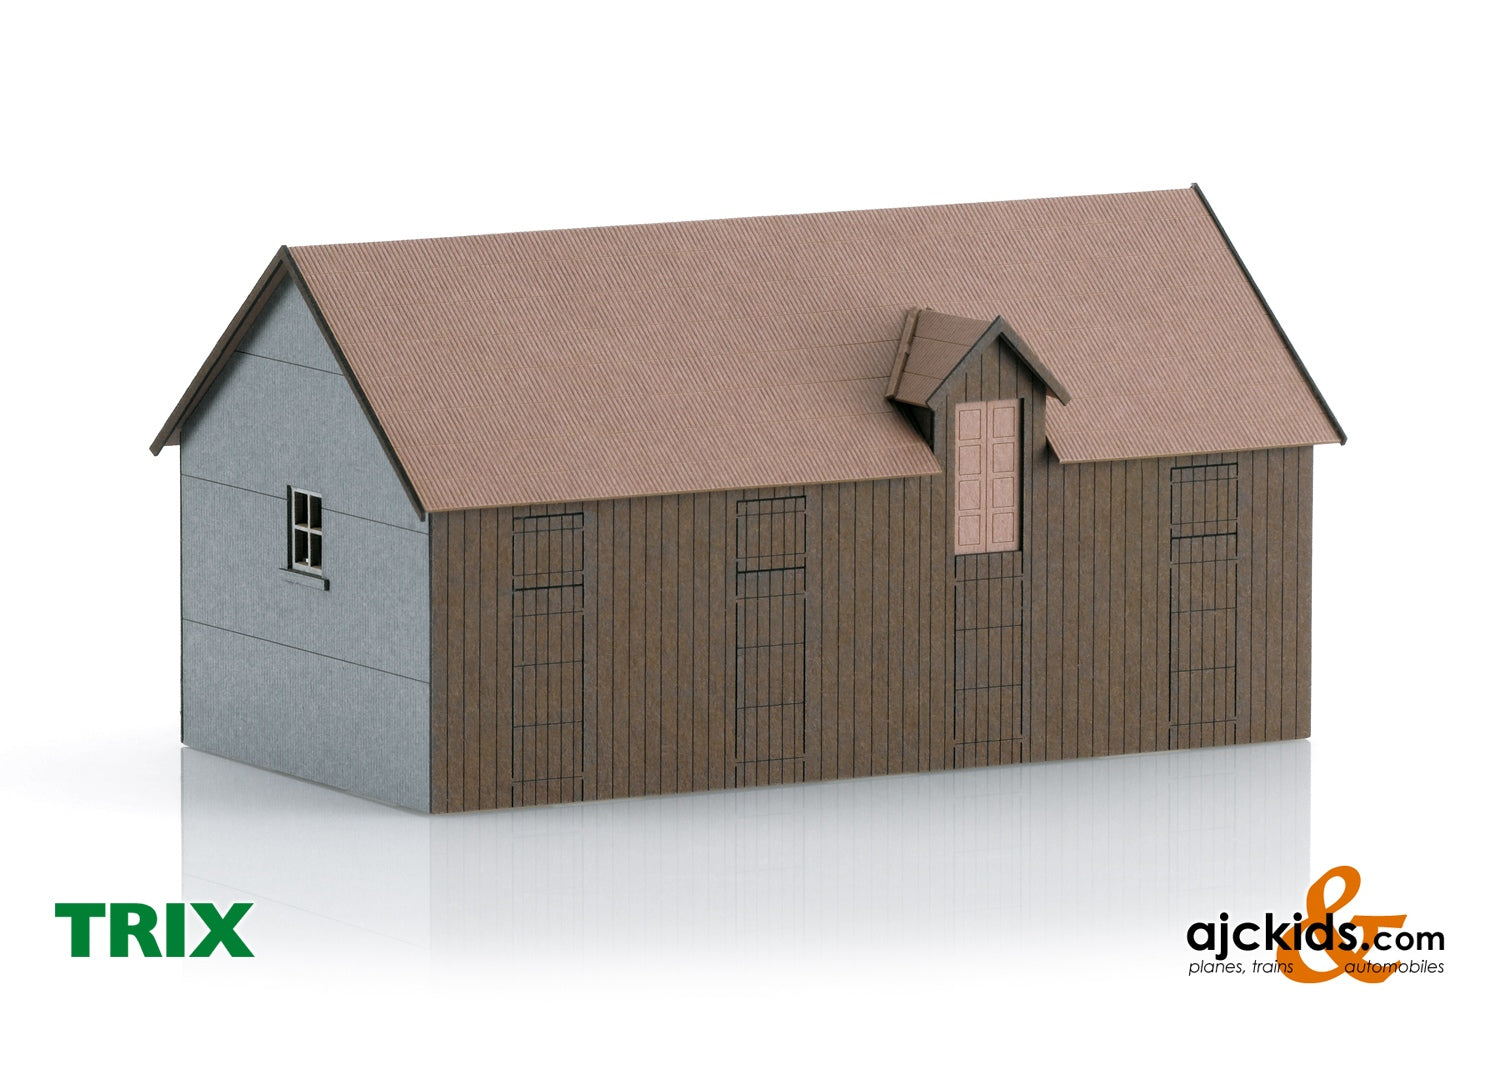 Trix 66339 - Coal Storage Building Kit